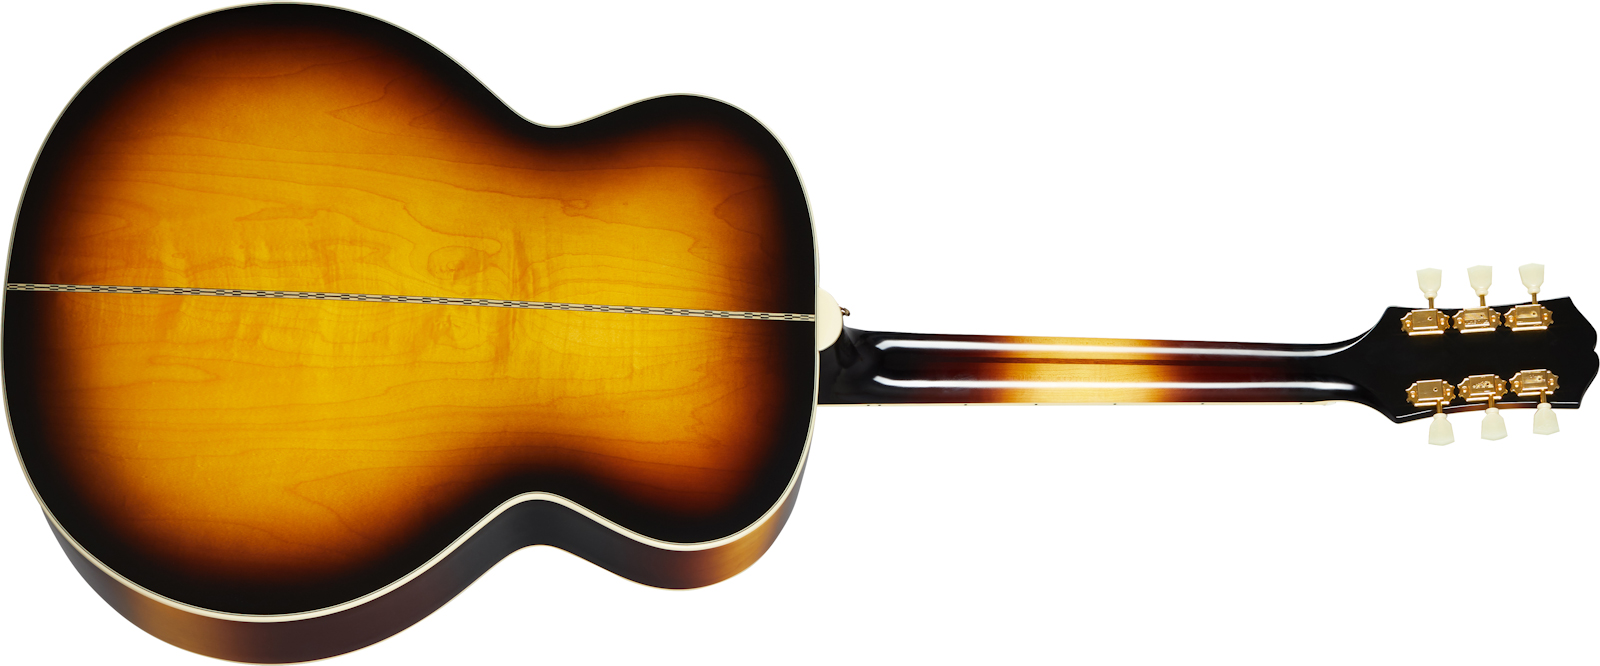 Epiphone J-200 Inspired By Gibson Jumbo Epicea Erable Lau - Aged Vintage Sunburst - Elektro-akoestische gitaar - Variation 1